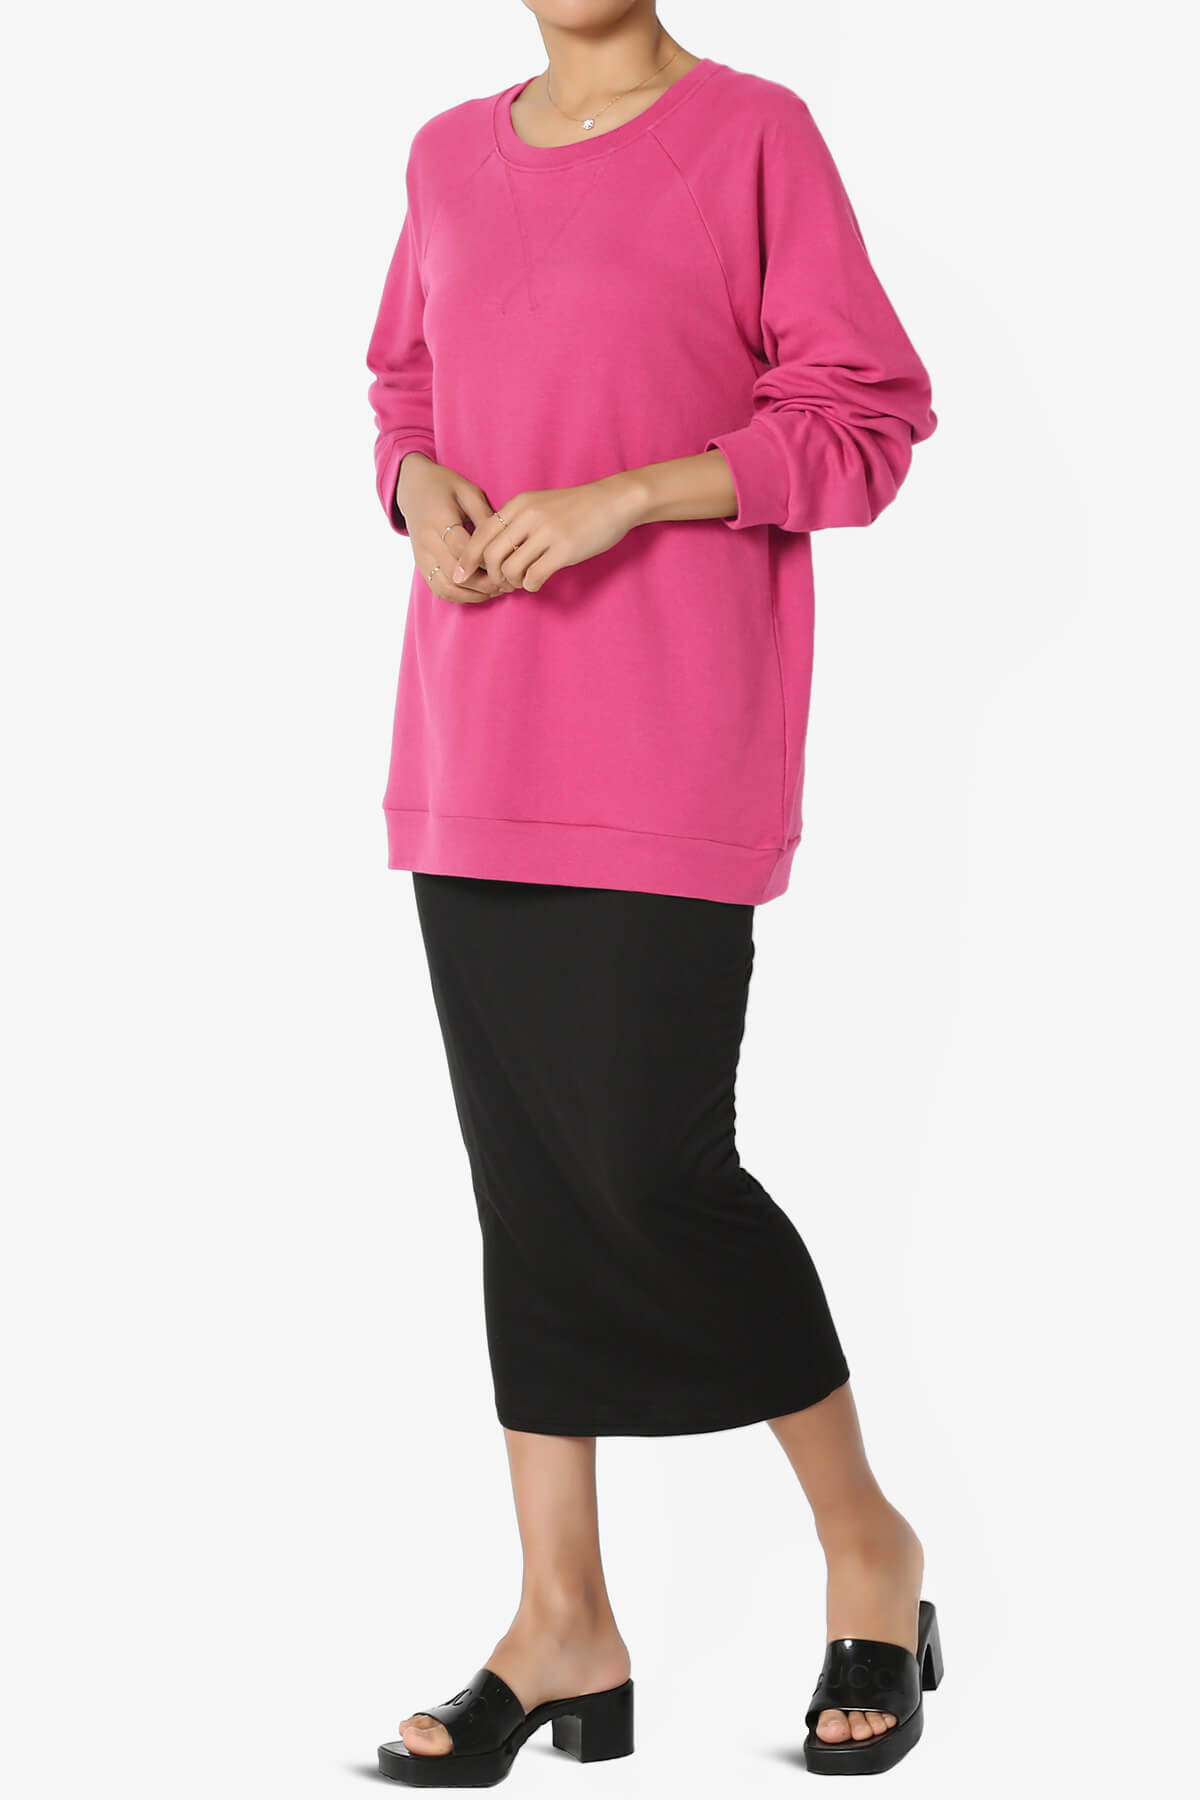 Carlene Cotton Raglan Sleeve Pullover Top HOT PINK_6